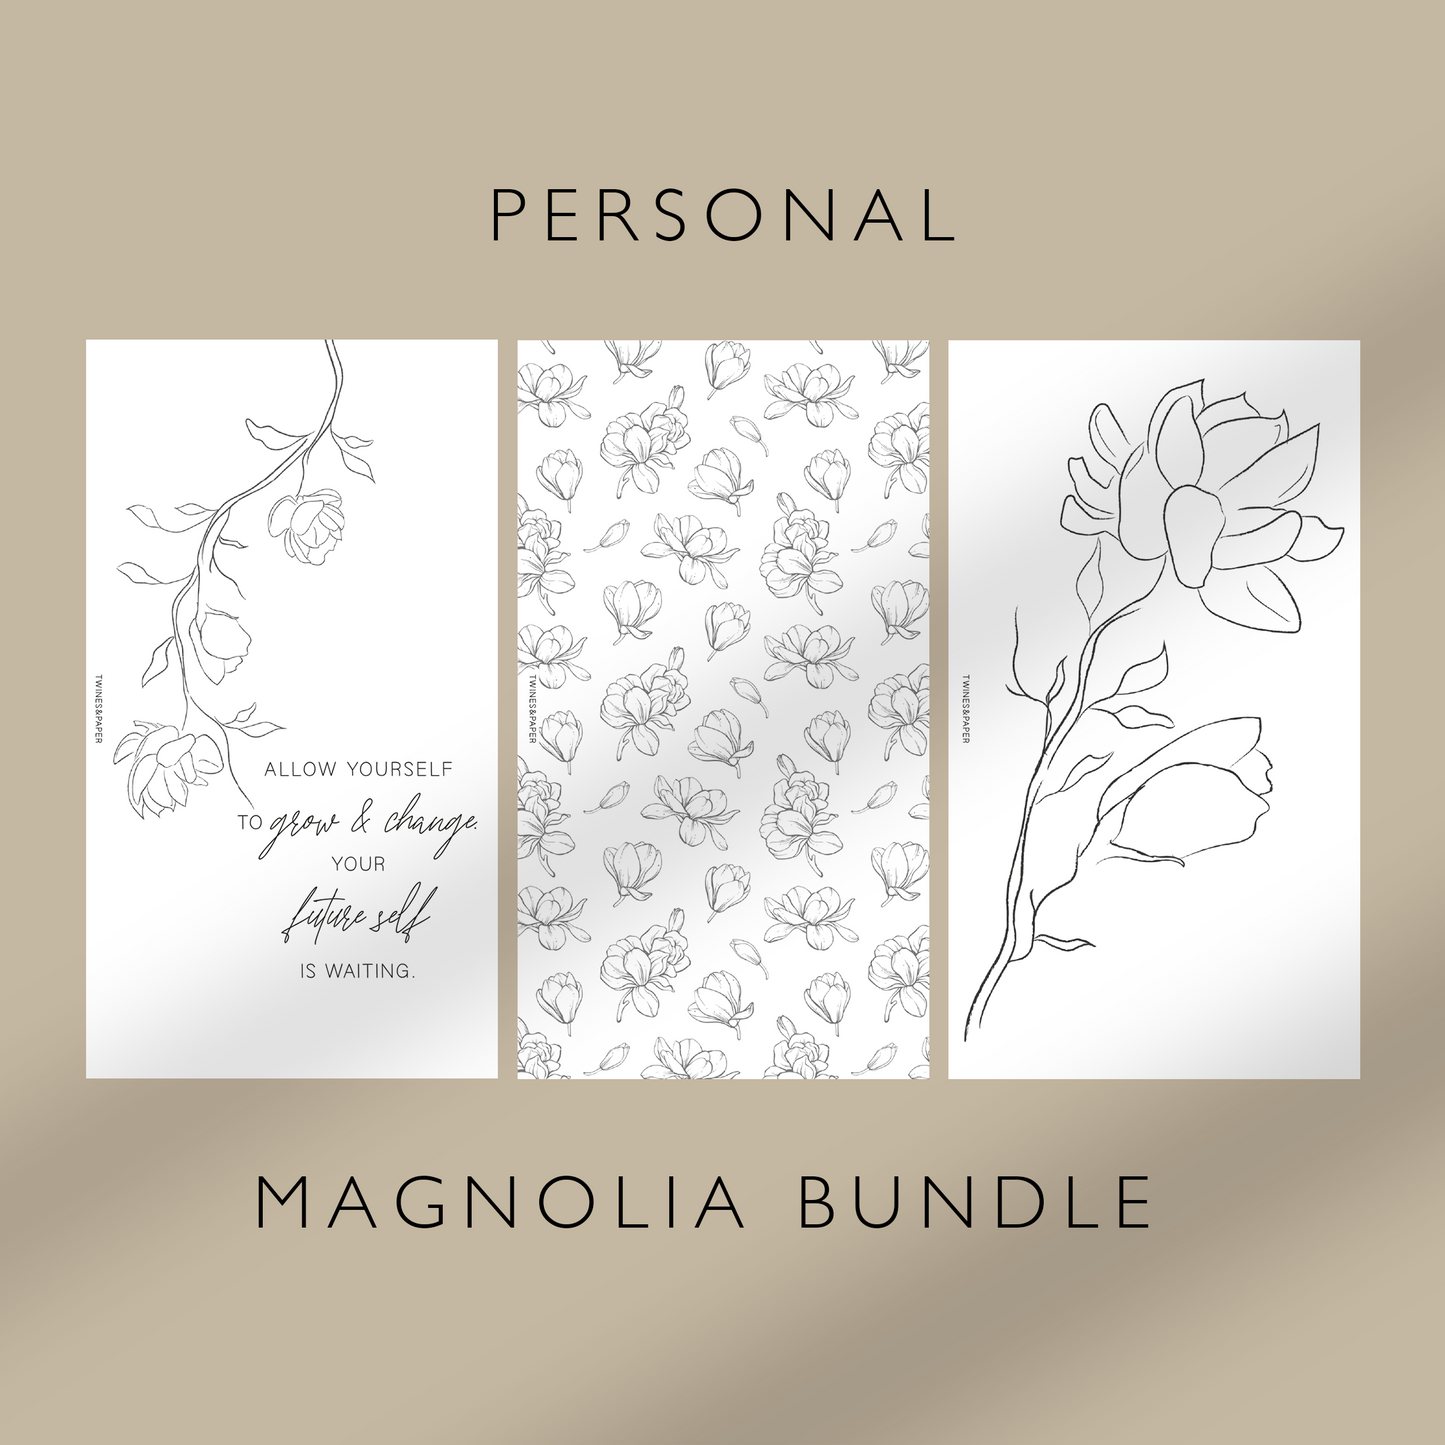 „Magnolia Bundle“ Druckbare Dashboards Pocket, A6, Personal, Personal Wide, A5